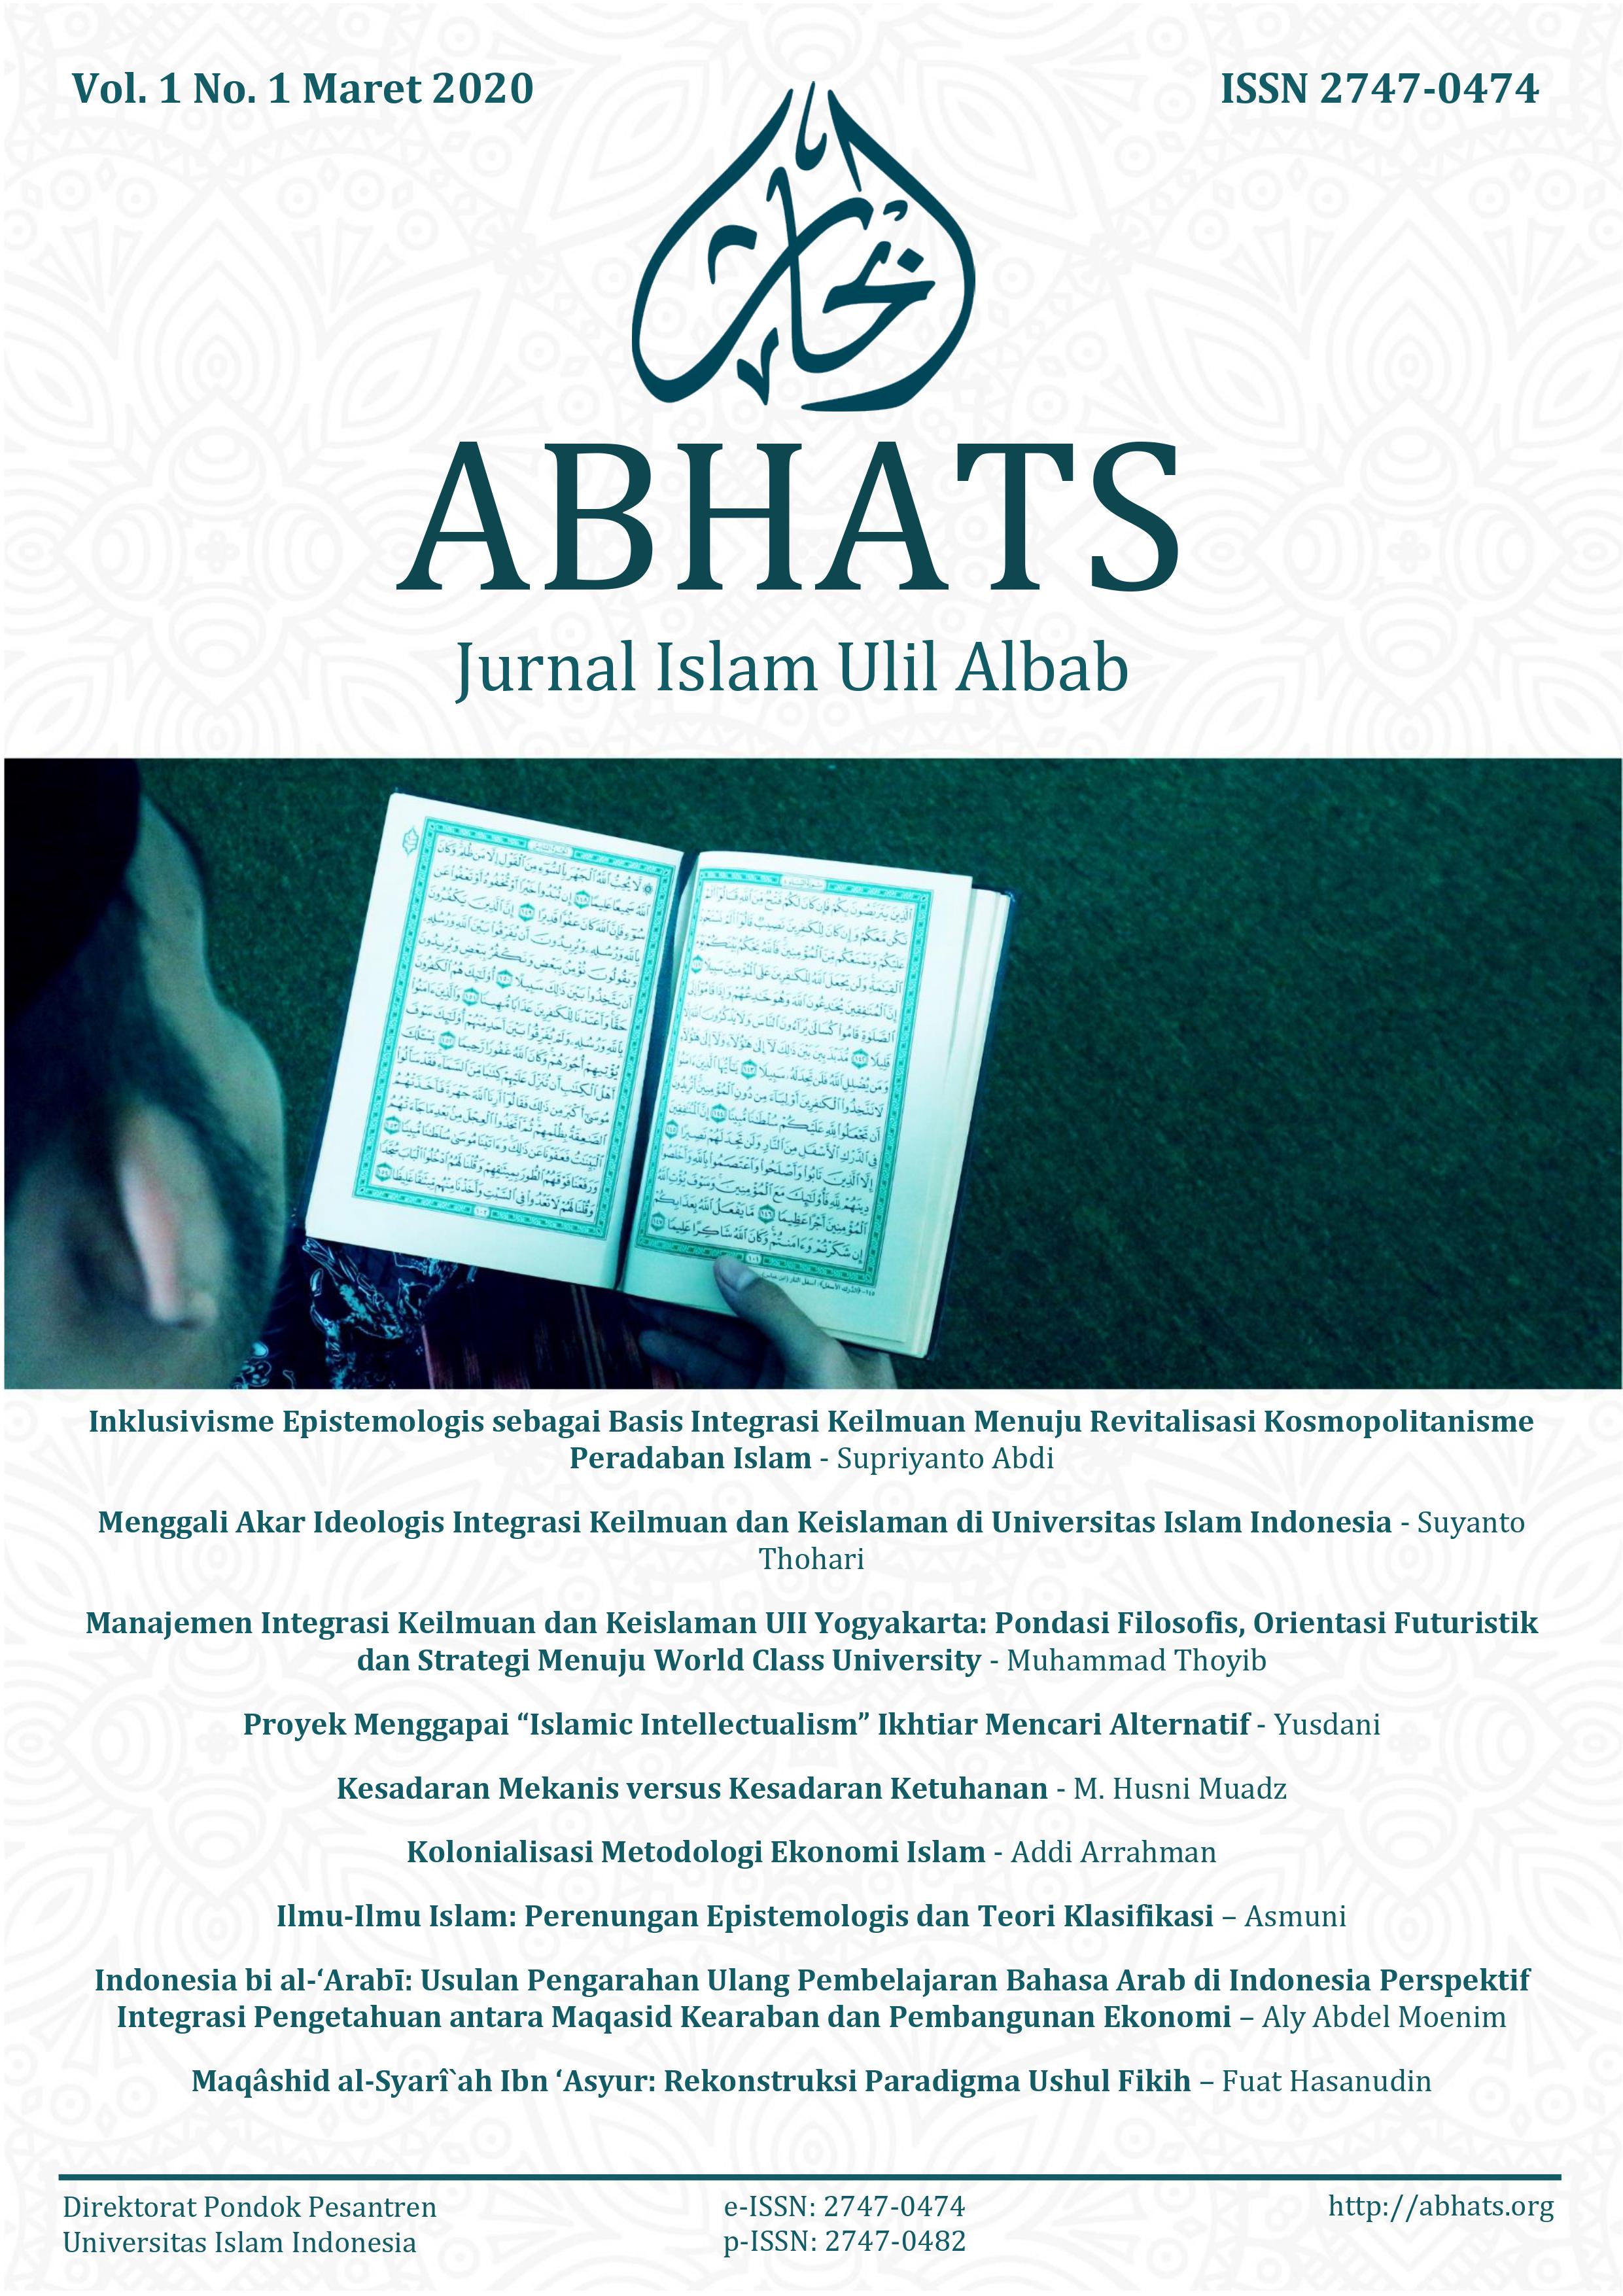 Cover Abhats: Jurnal Islam ulil Albab Vol 1 Issue 1 Maret 2020